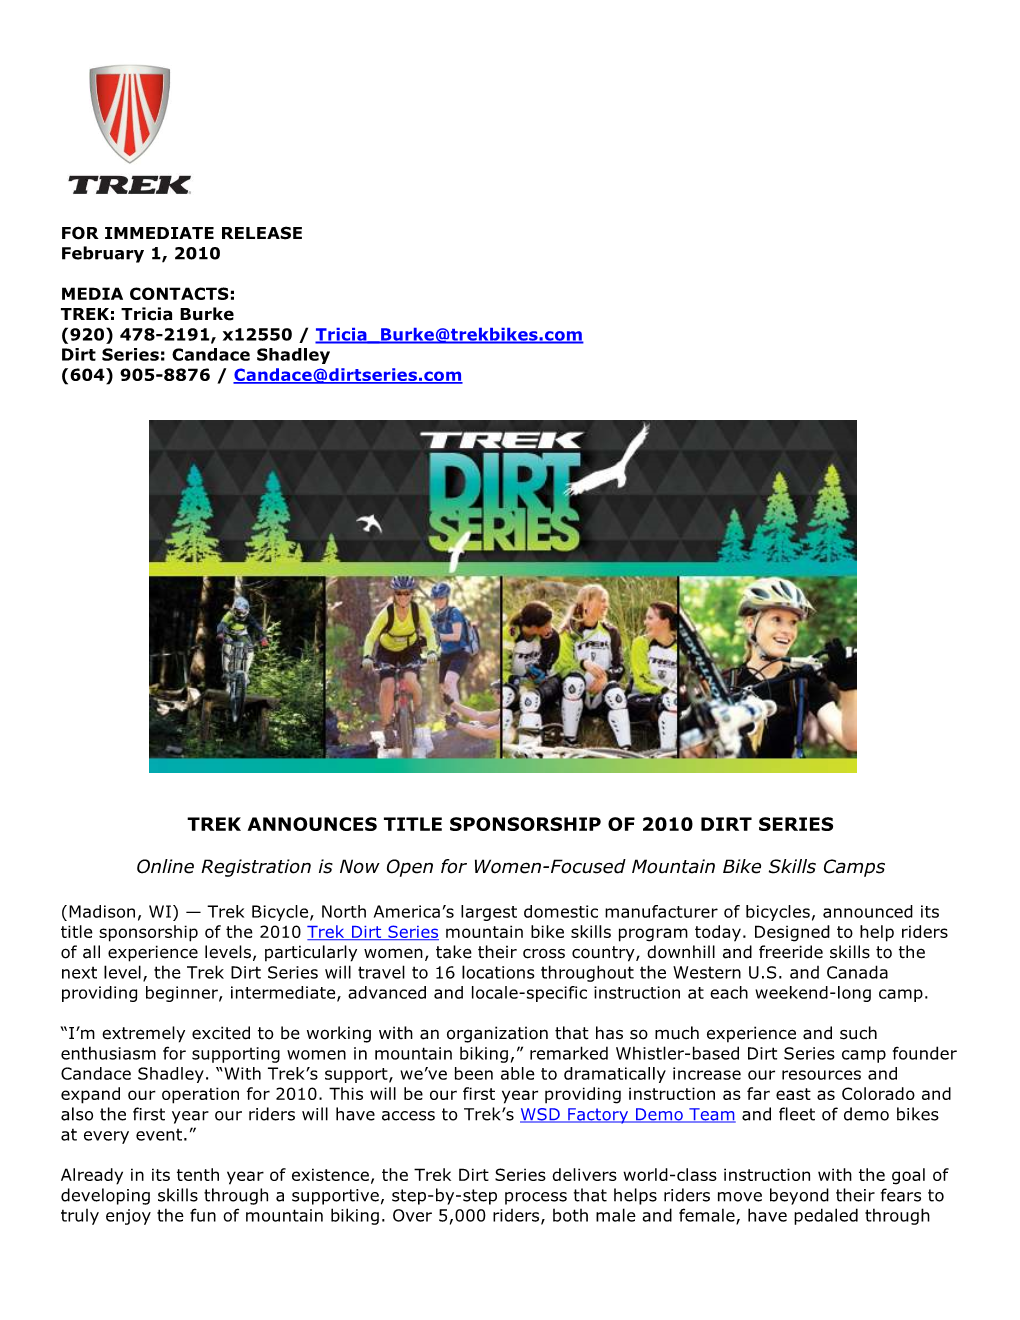 Trek Announces Title Sponsorship of 2010 Dirt Series